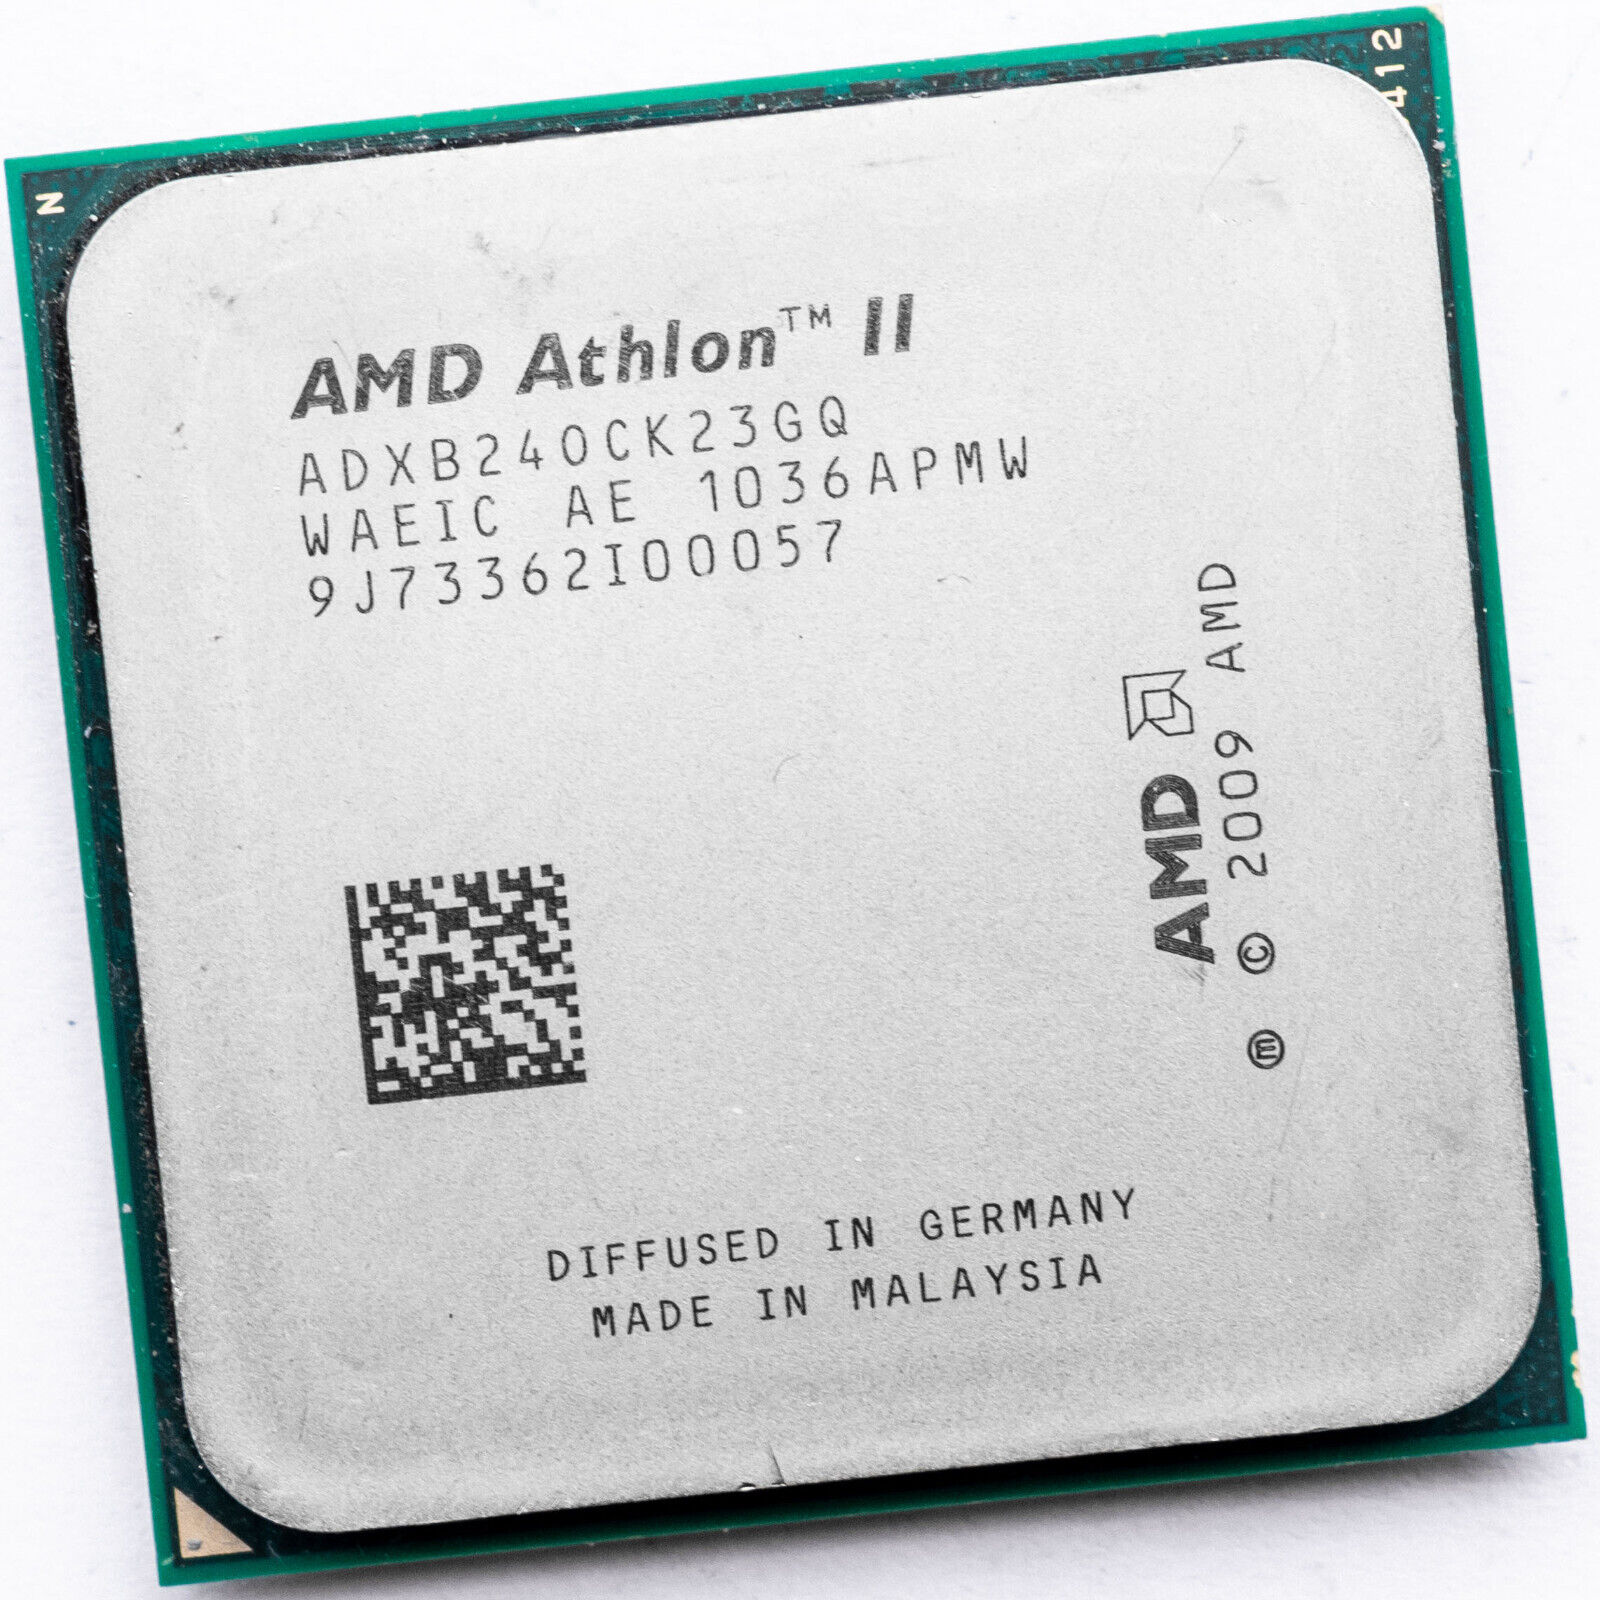 AMD Athlon II X2 B24 ADXB240CK23GQ AM3 3GHz 2MB Dual Core Processor Cool'n'Quiet